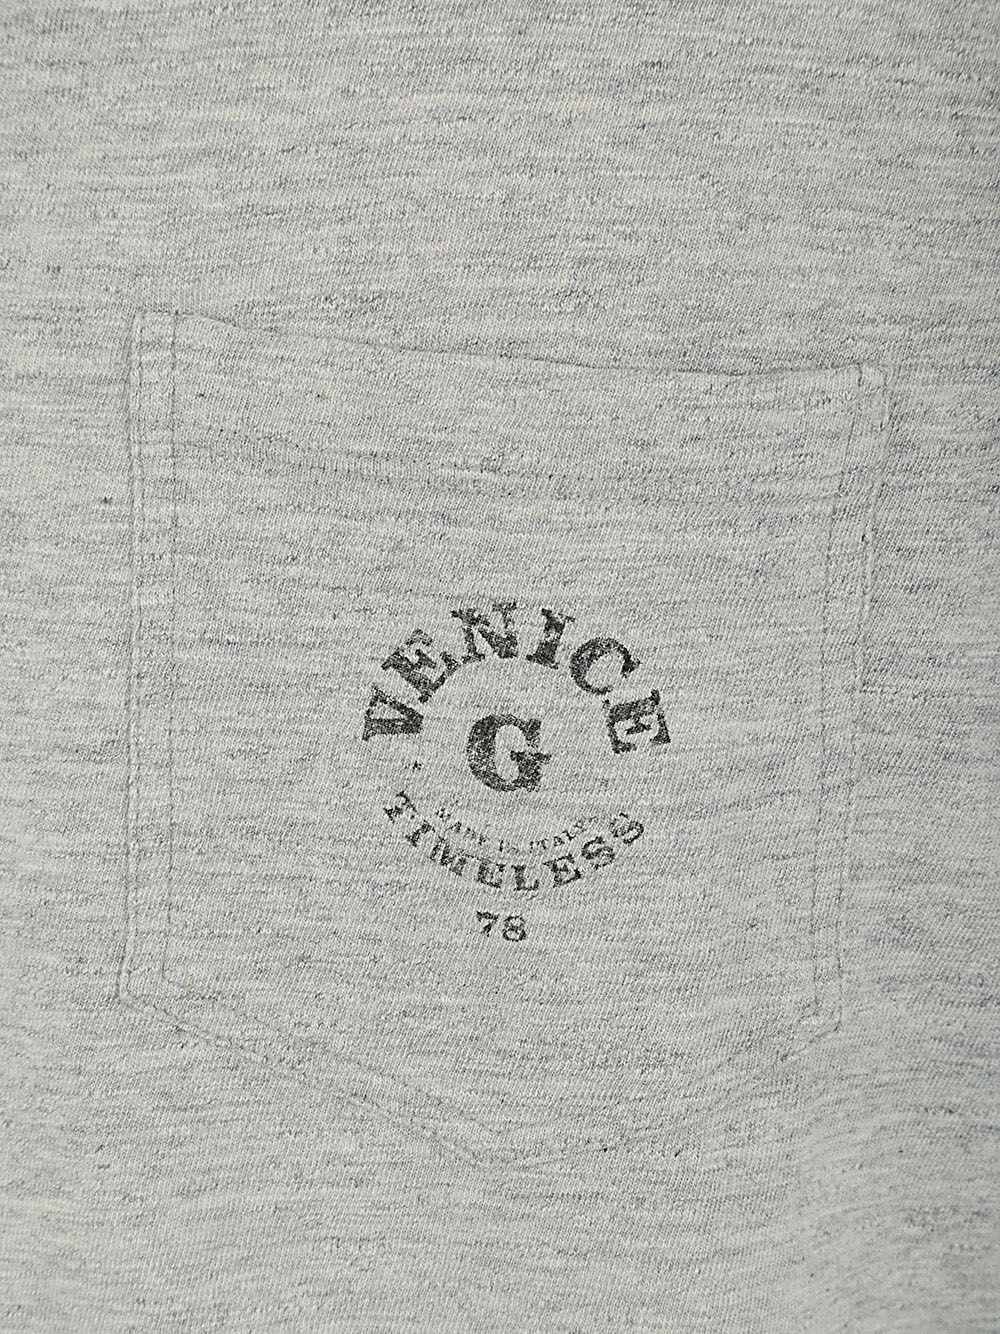 Shop Golden Goose Journey M`s Regular Short Sleeves T-shirt With Pocket In Grey